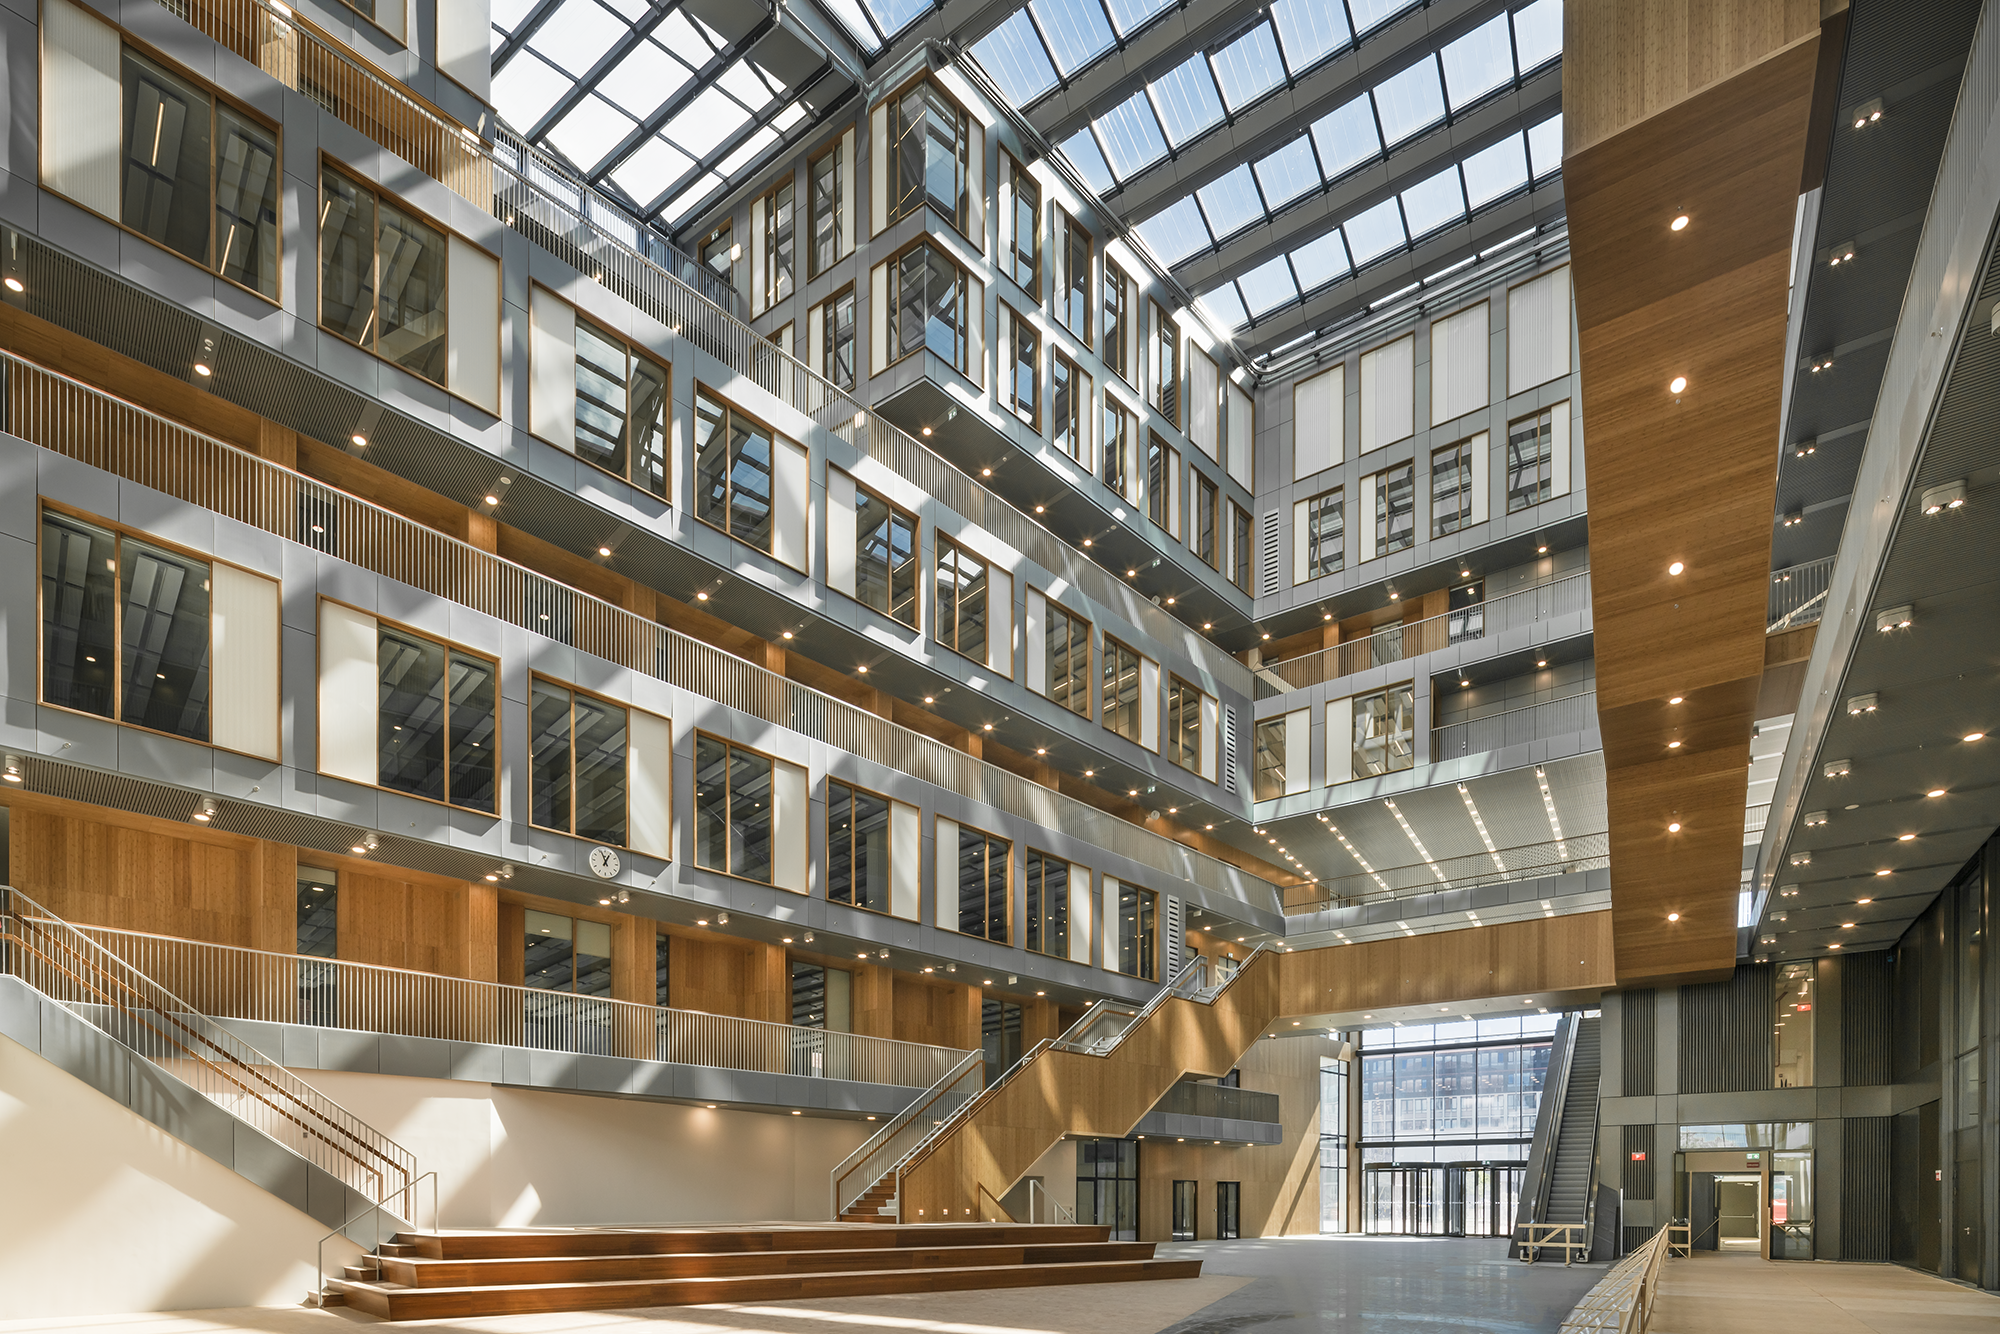 New University Building VU Amsterdam (interior)